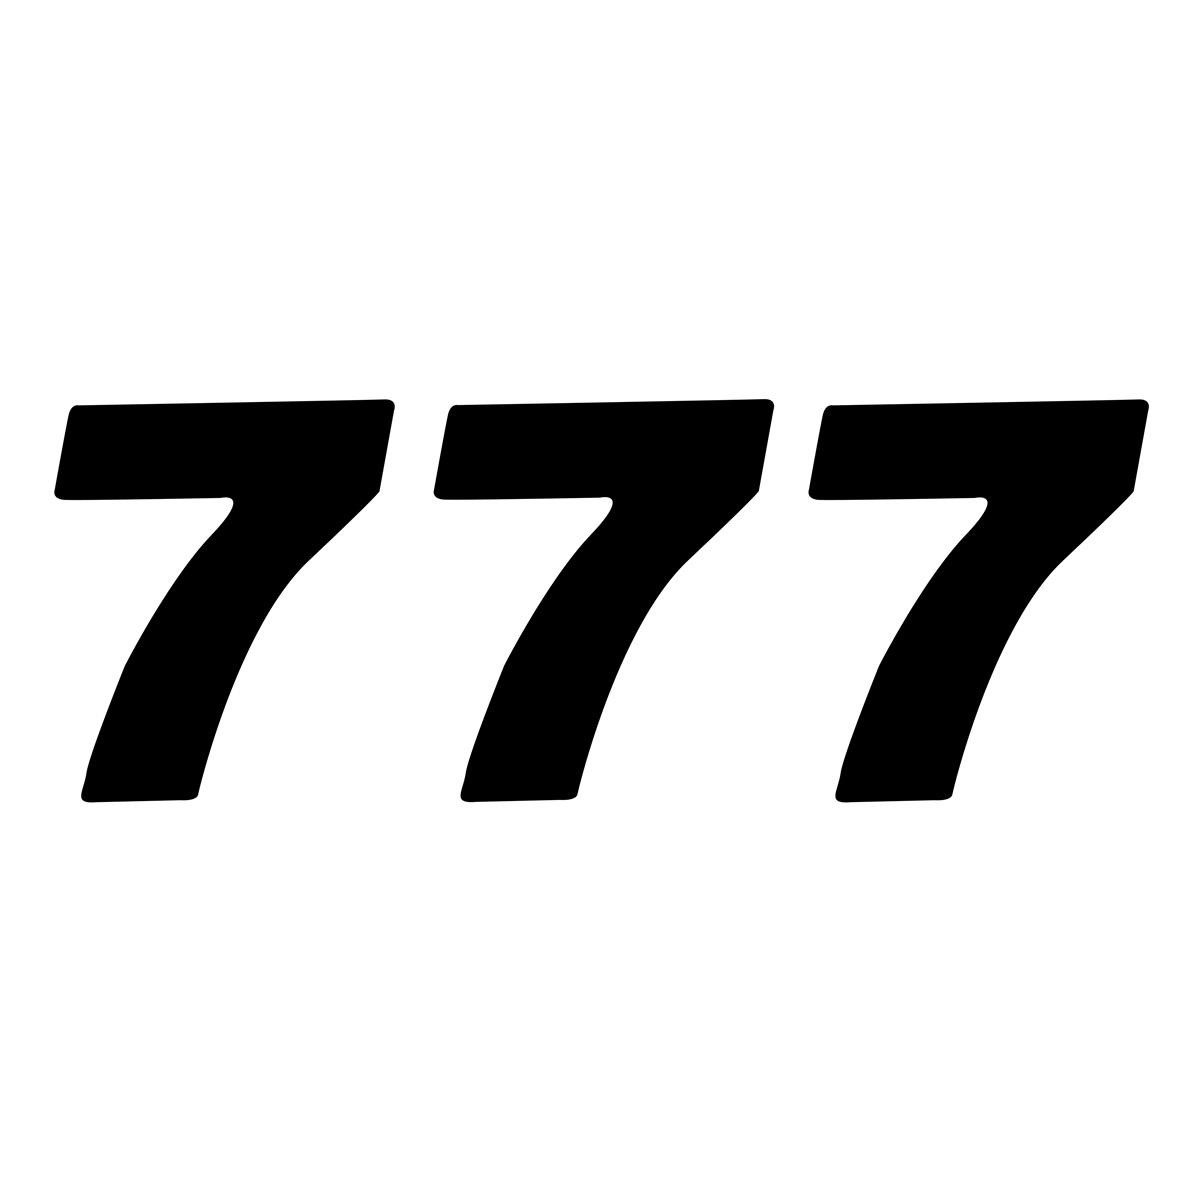 ZAP Numbers Set US-Style Number 7, Black, 10 cm, 3 Pack